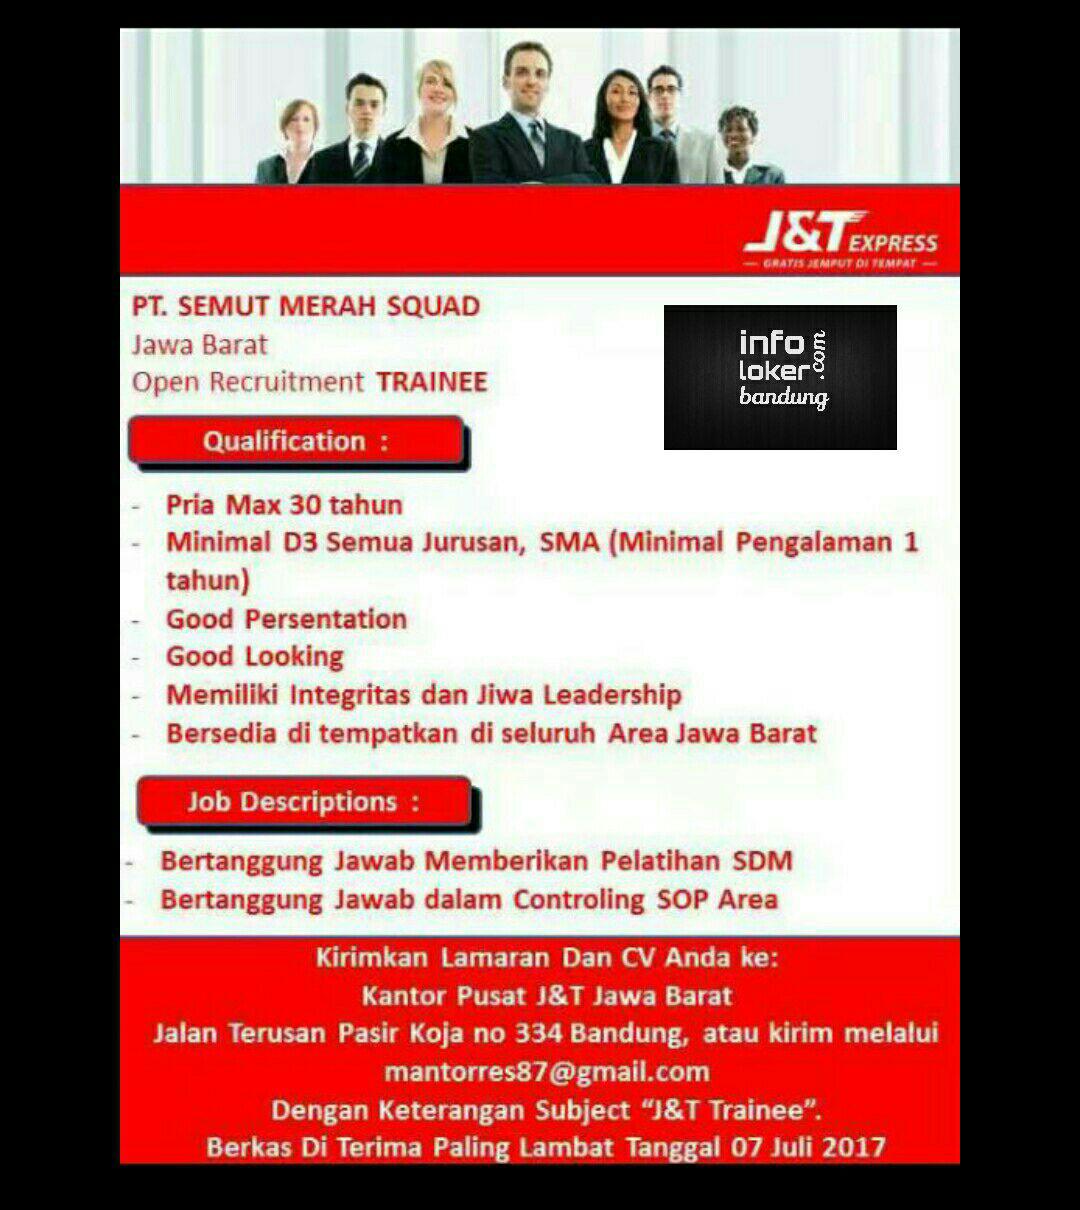 Lowongan Kerja J&T Express Bandung Juli 2017 - Info 